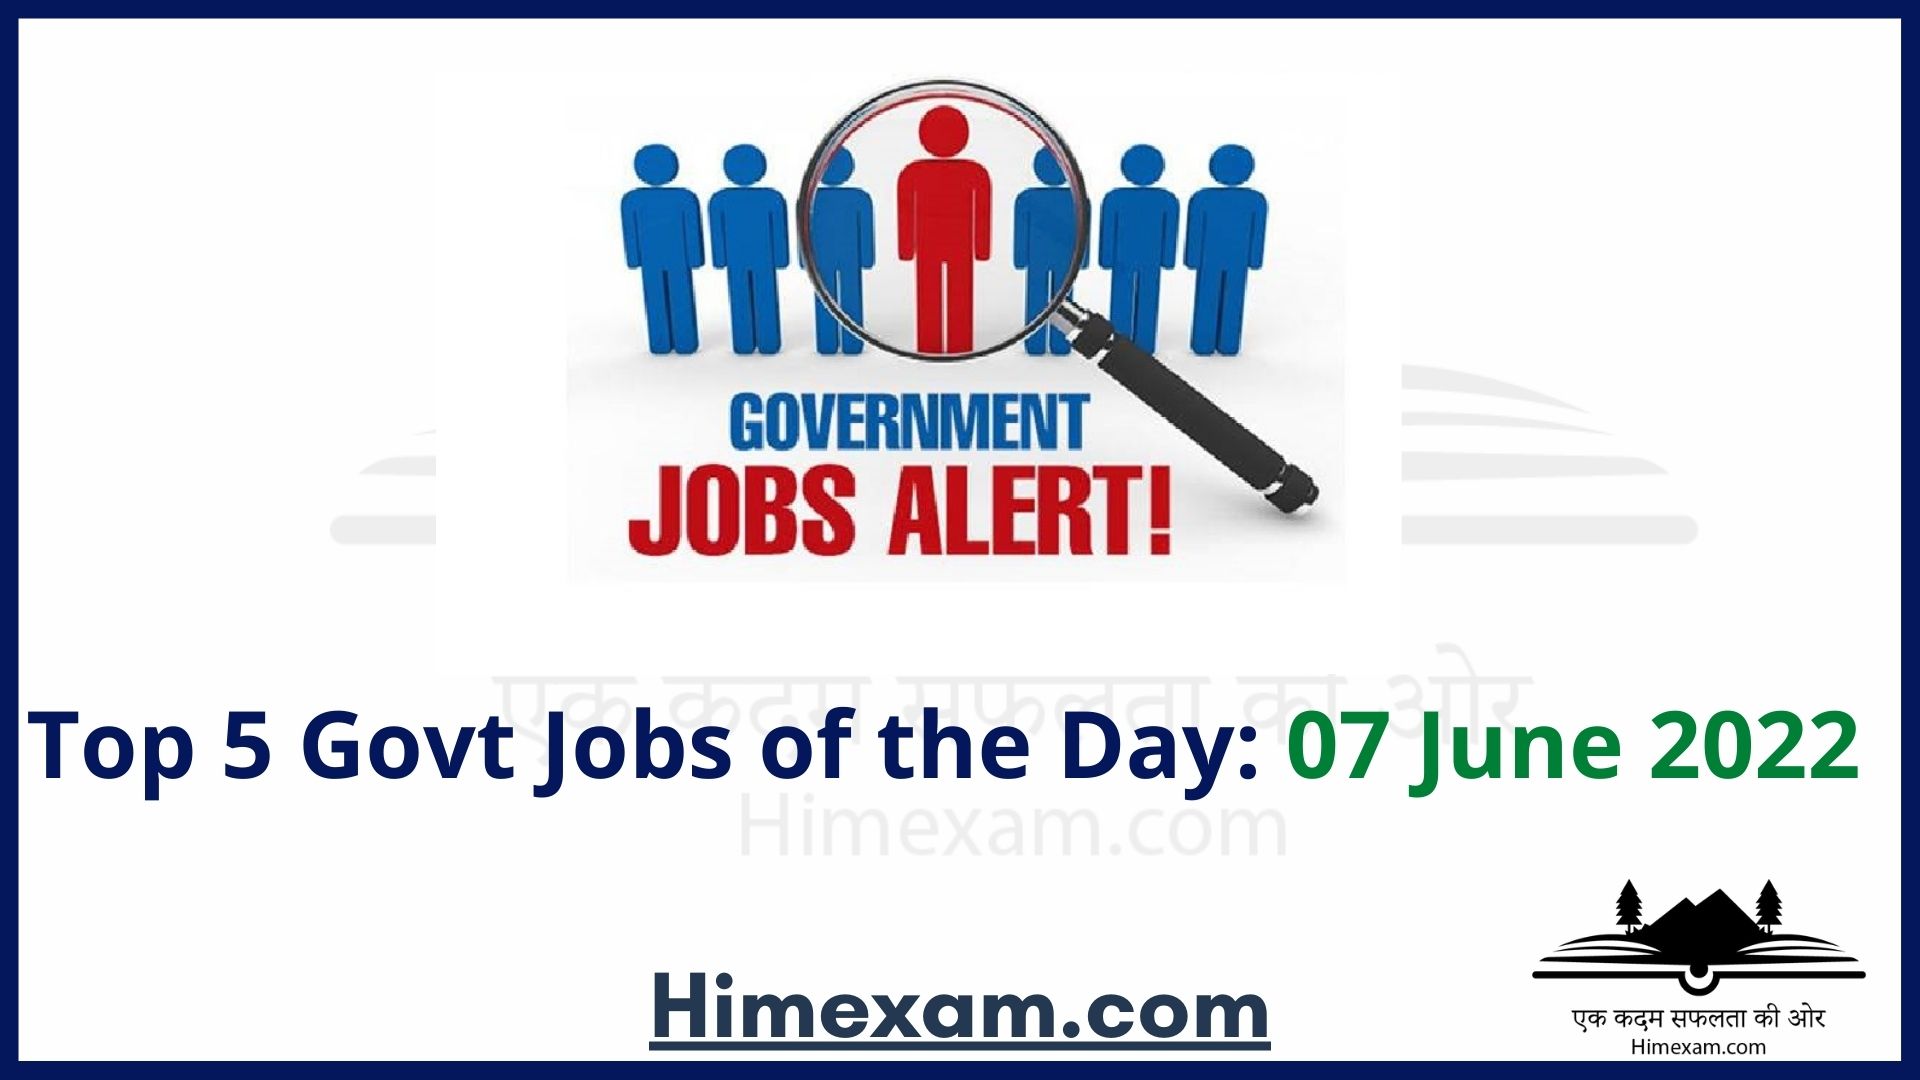 Top 5 Govt Jobs of the Day: 07 June 2022